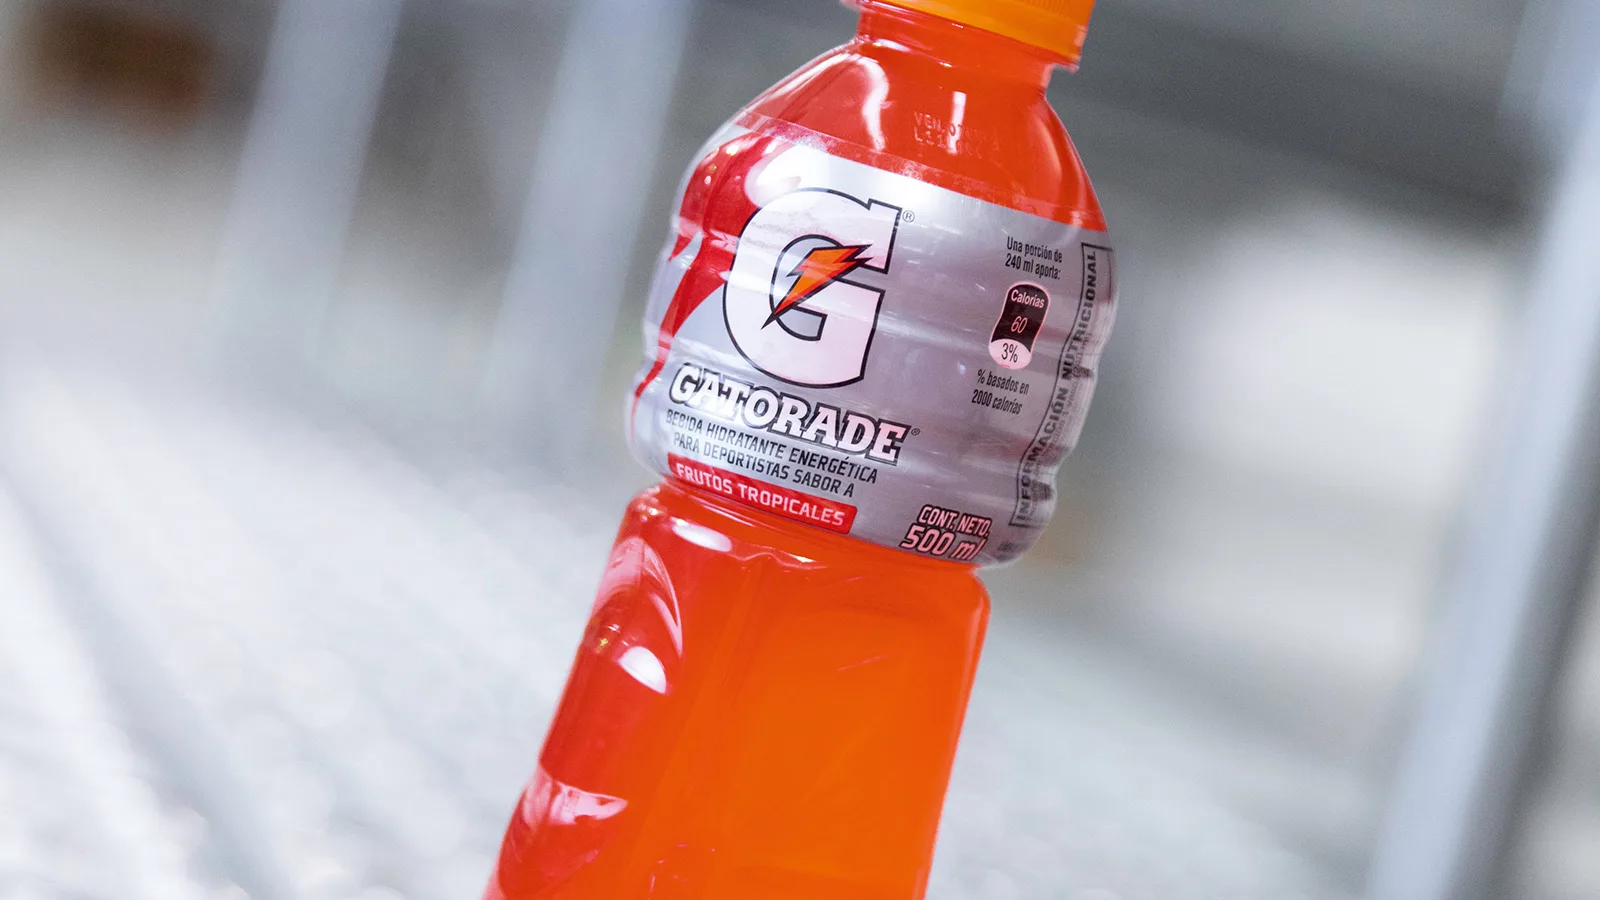 A bottle of orange liquid